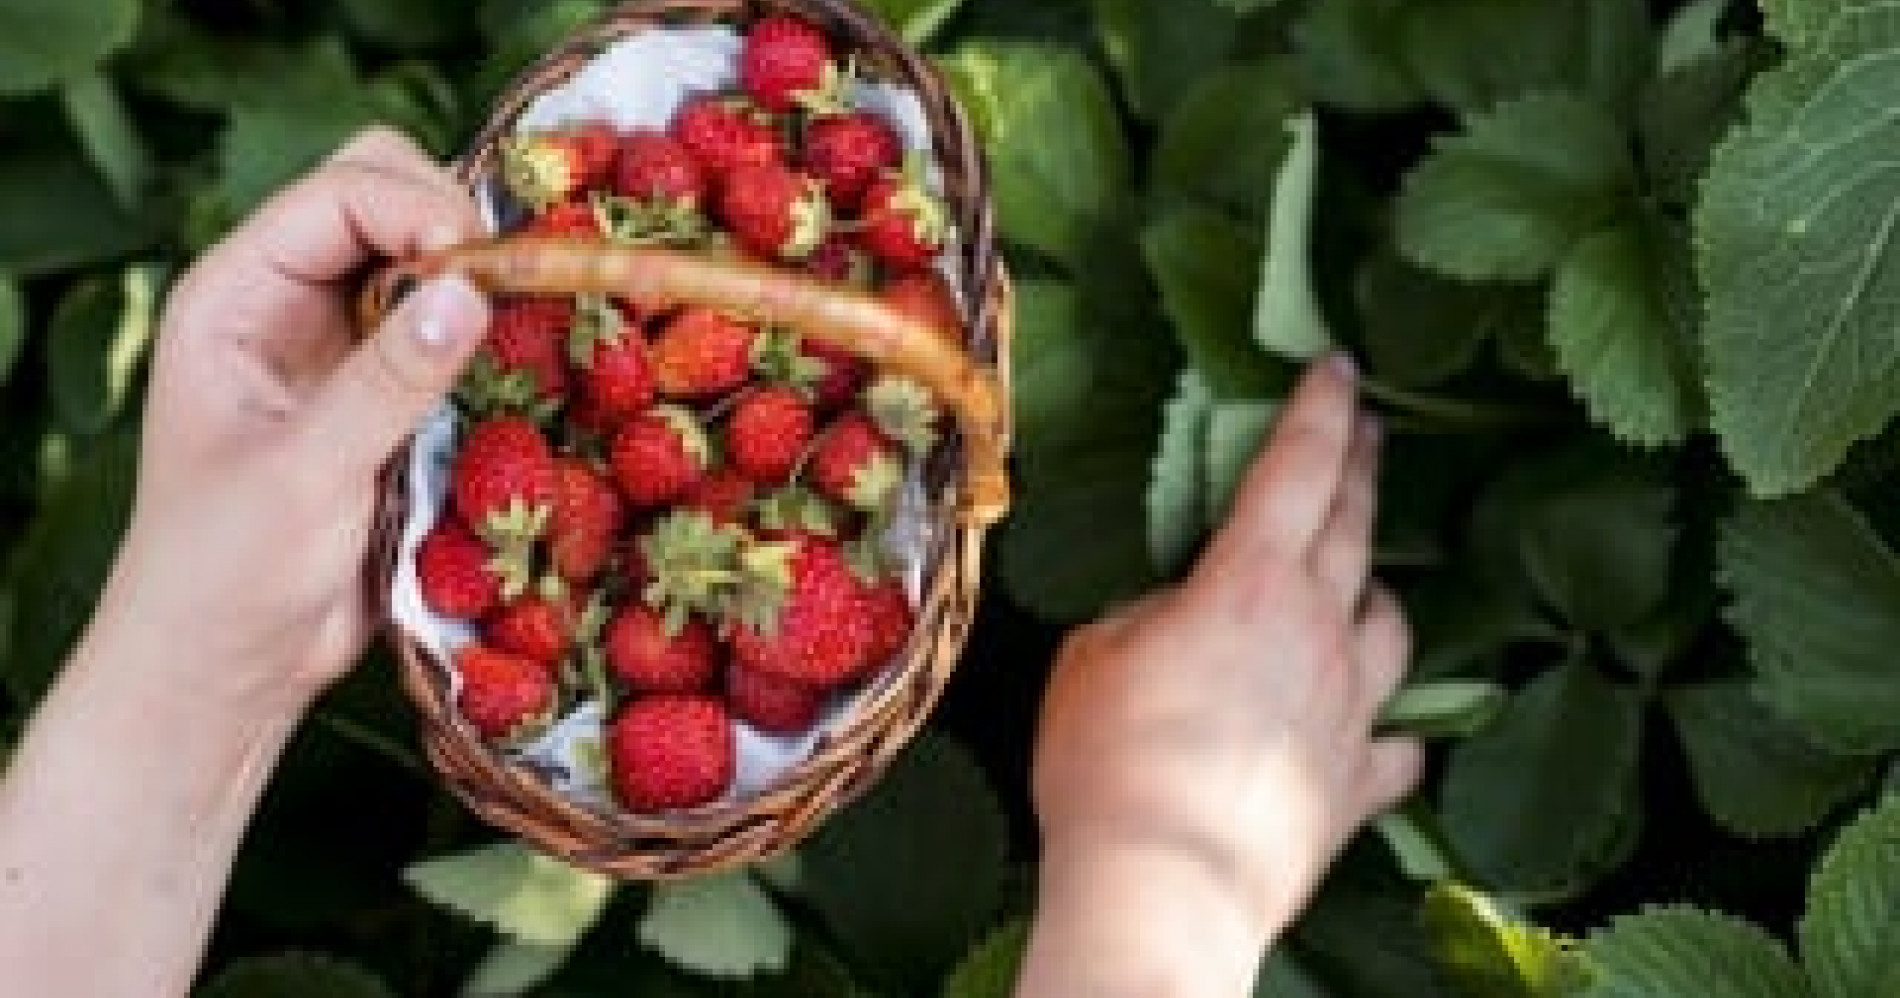 Budidaya strawberry di Peti Kemas (Sumber: ayobandung.com)